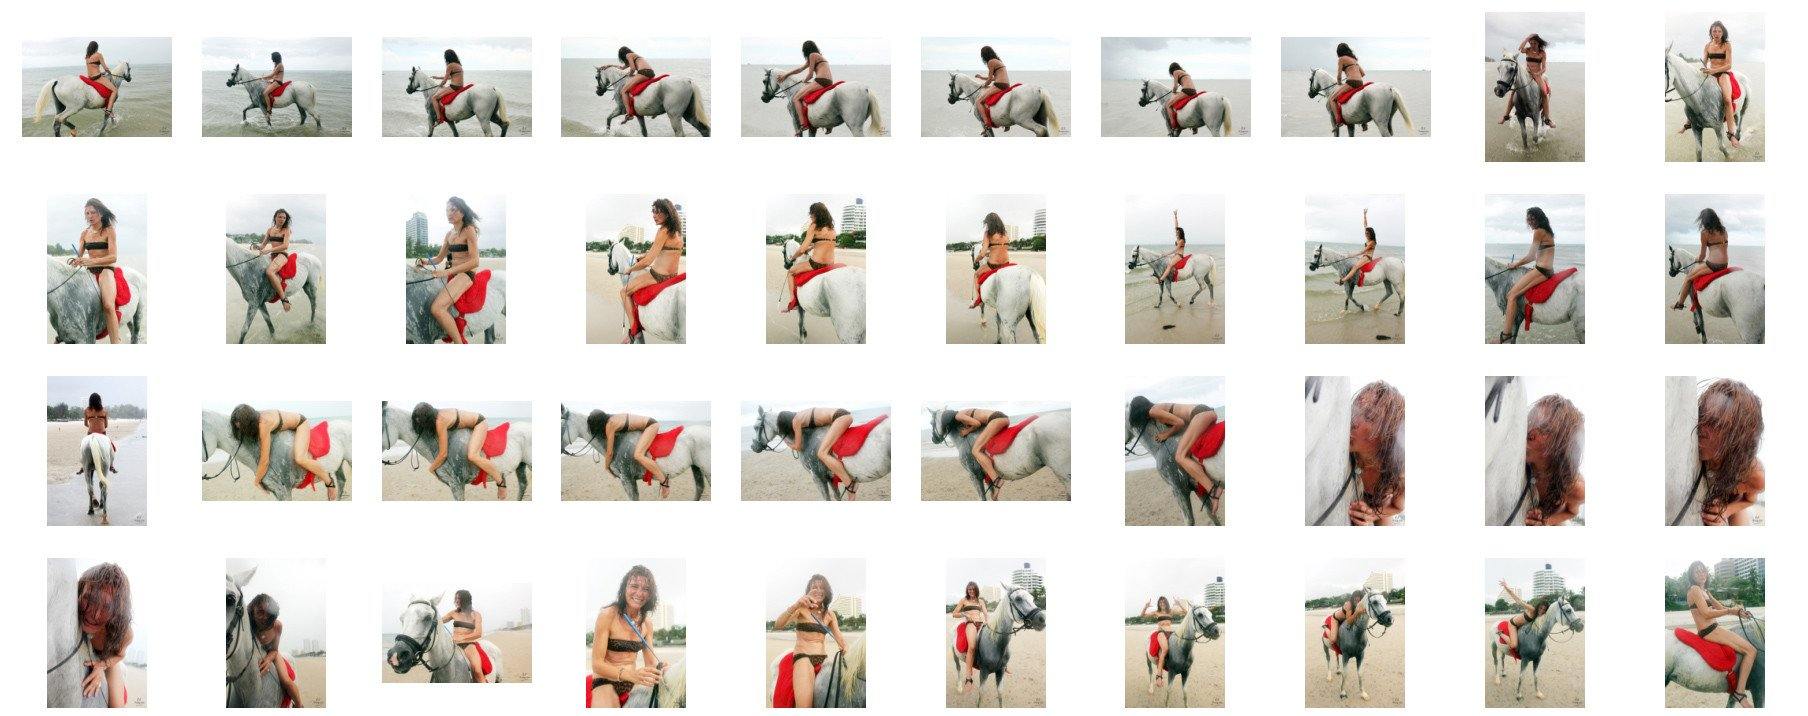 Claire in Bikini Riding Bareback on White Arabian Horse, Part 4 - Riding.Vision